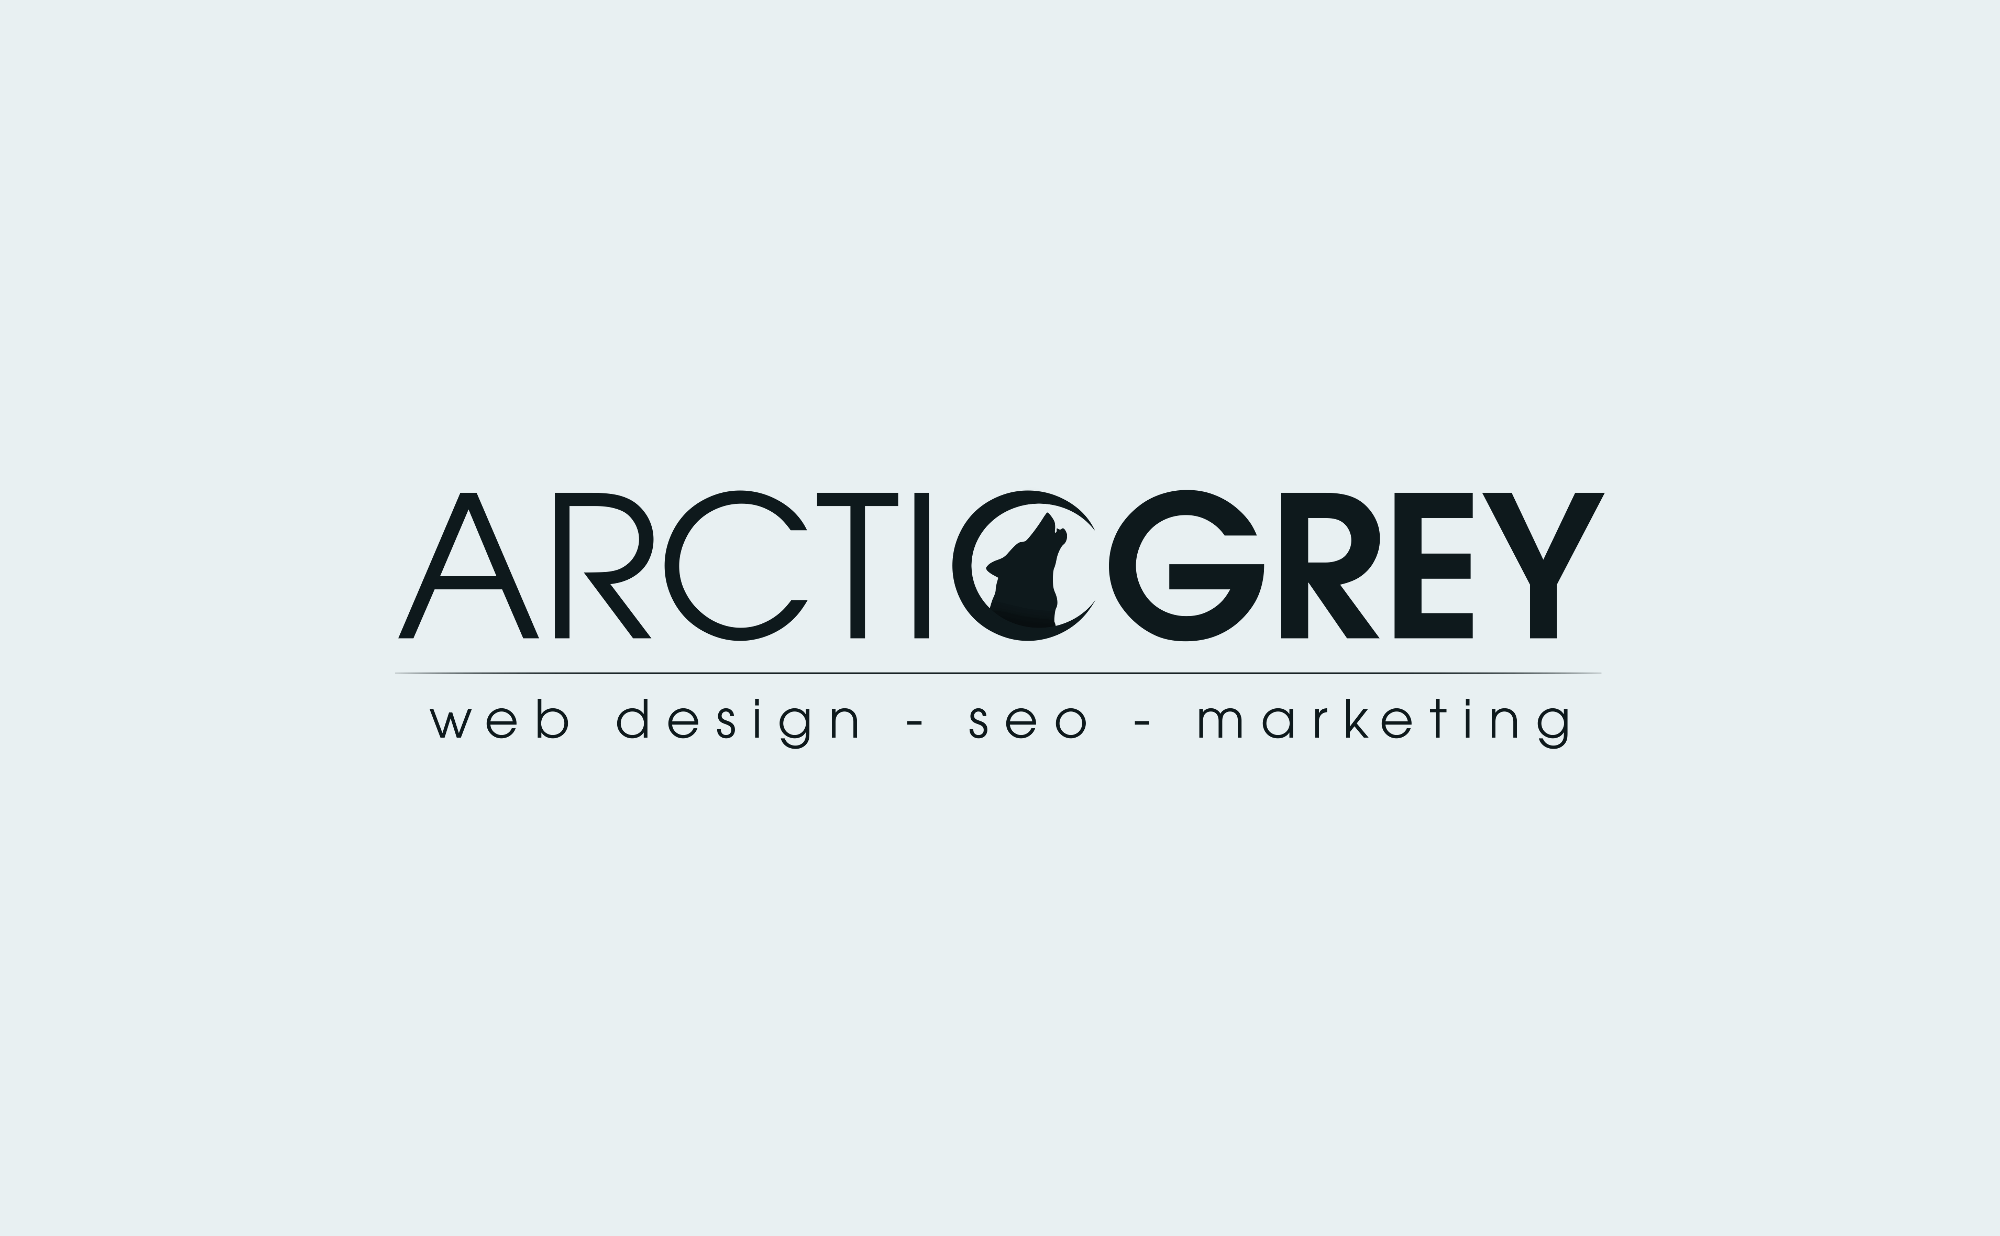 Best Shopify Design Firm Logo: Arctic Grey Inc